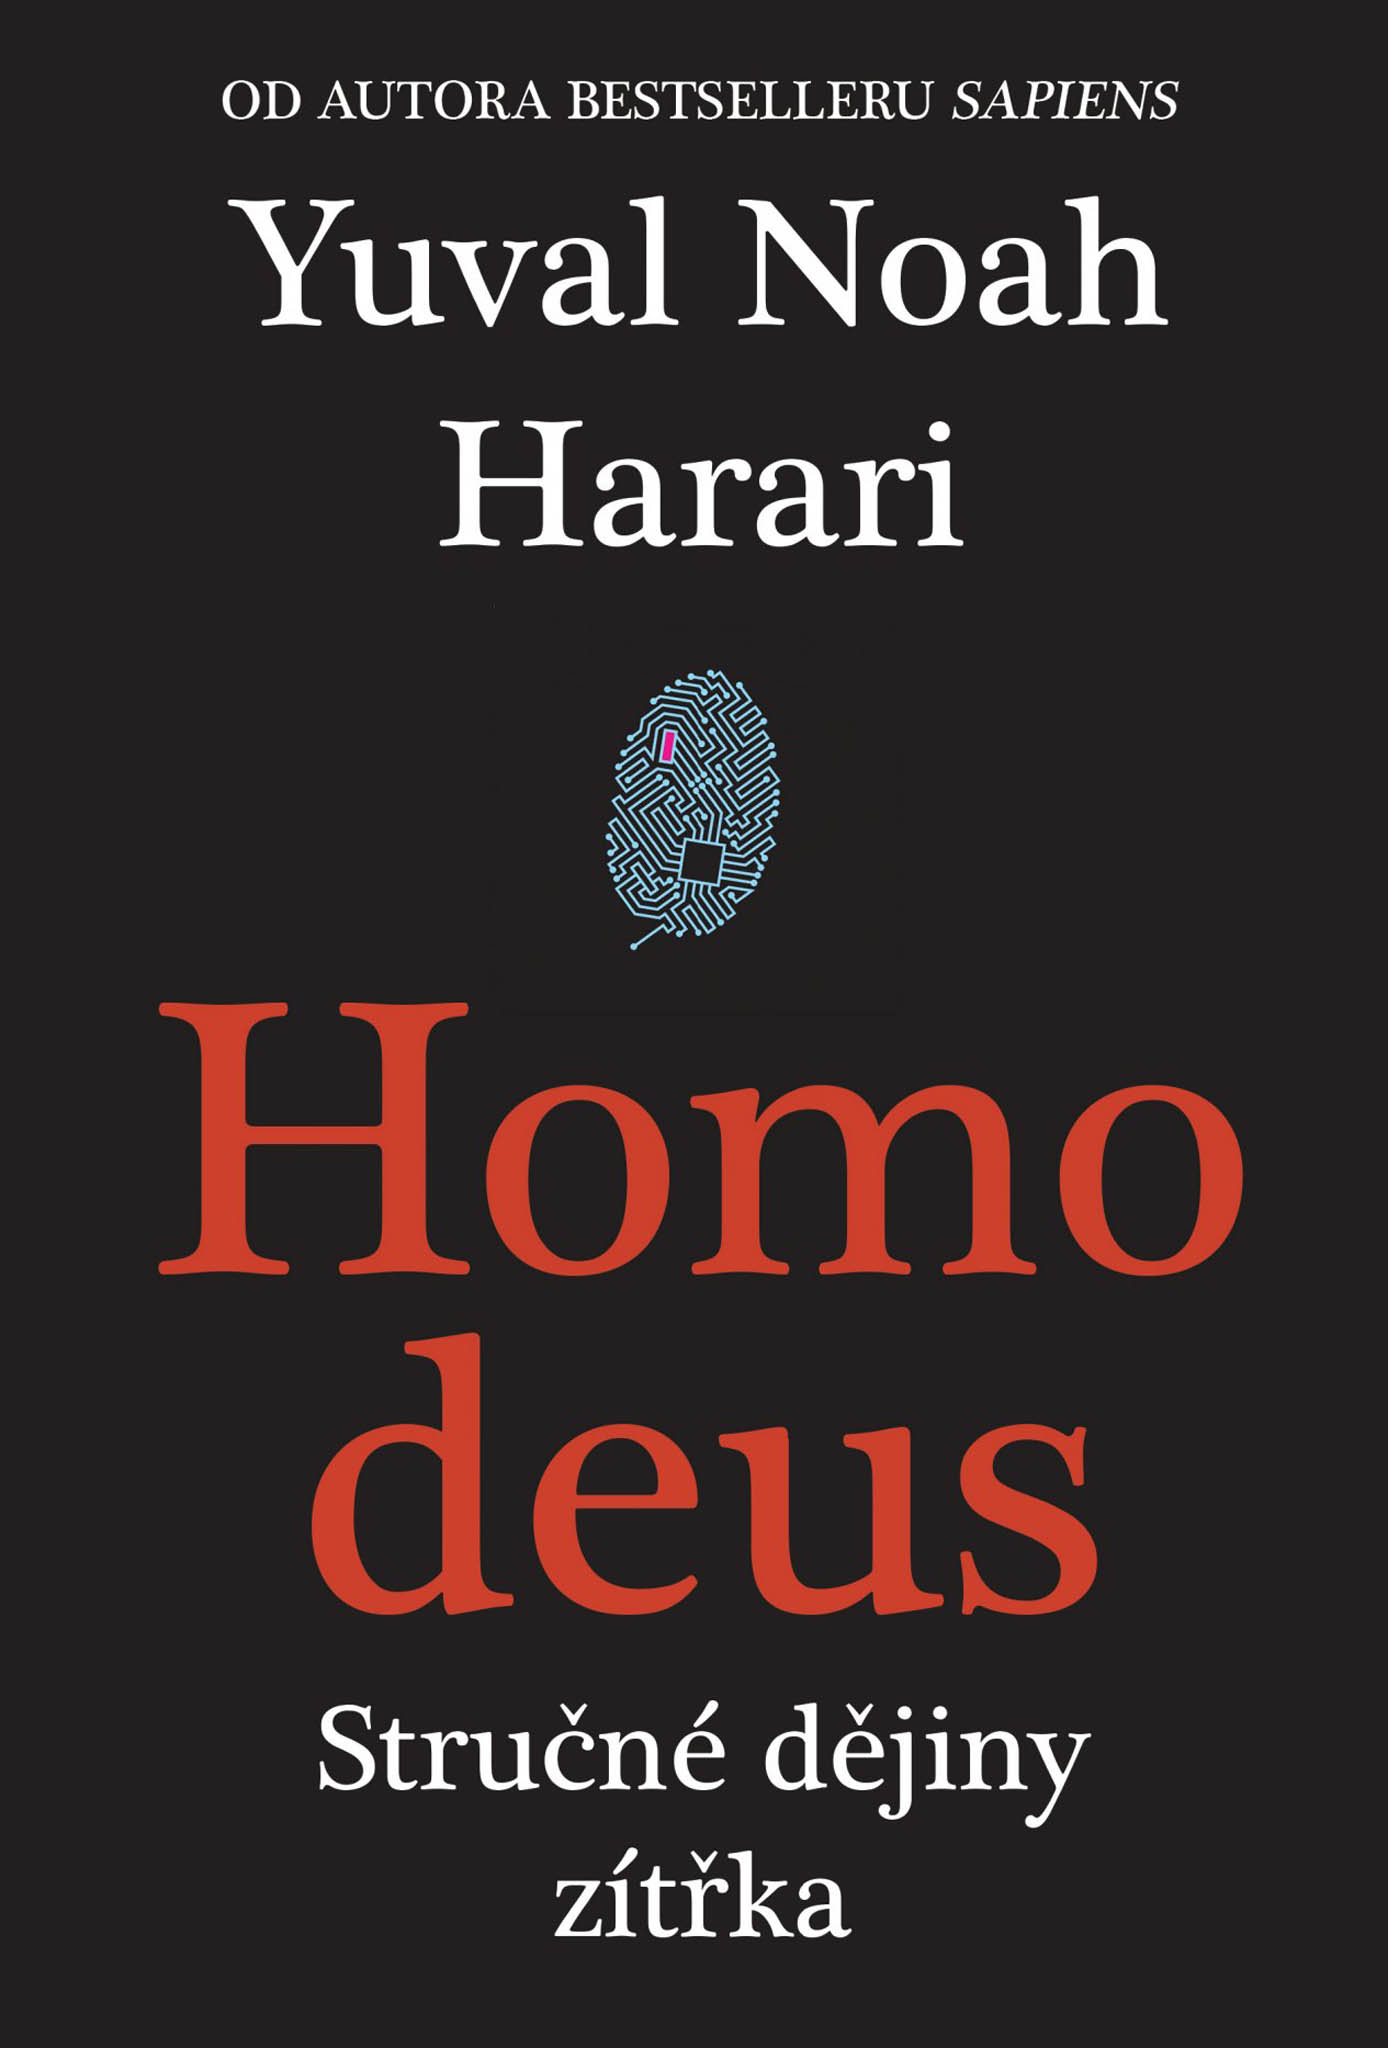 Yuval Noah Harari: Homo Deus – Strun djiny ztka, Leda, 2017